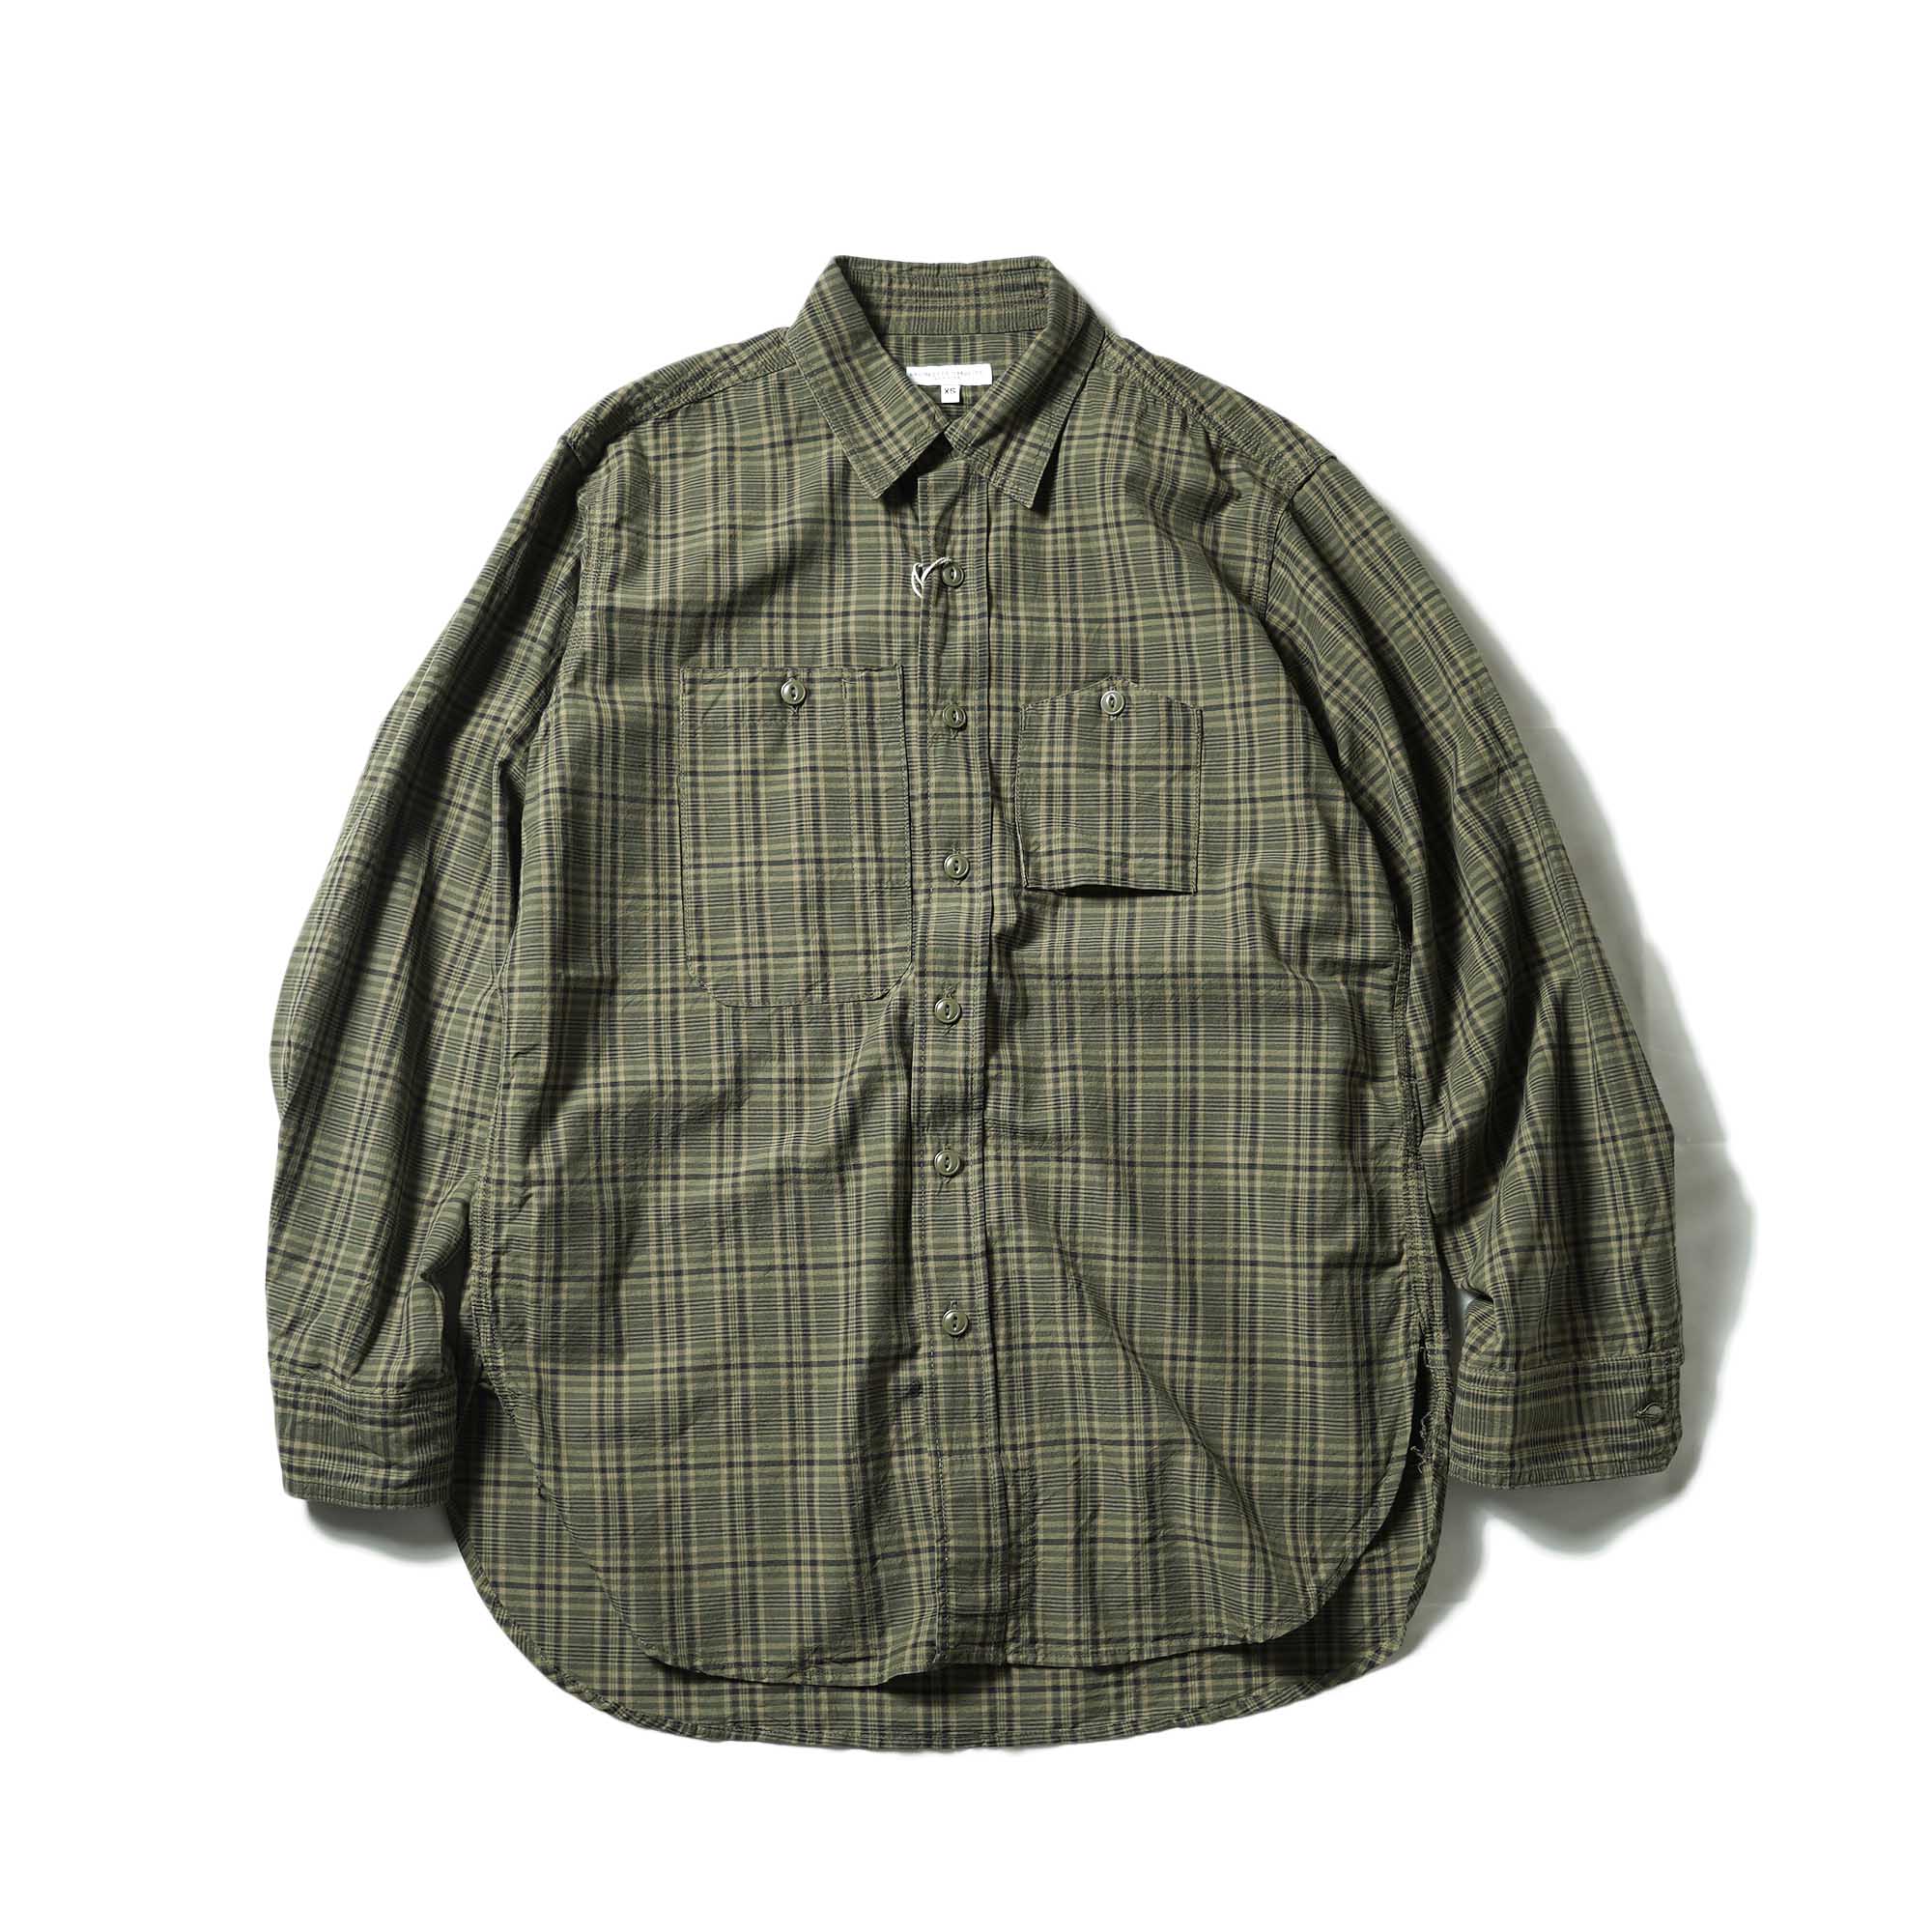 Engineered Garments / Work Shirt - Cotton Madras Check (Olive/Brown)